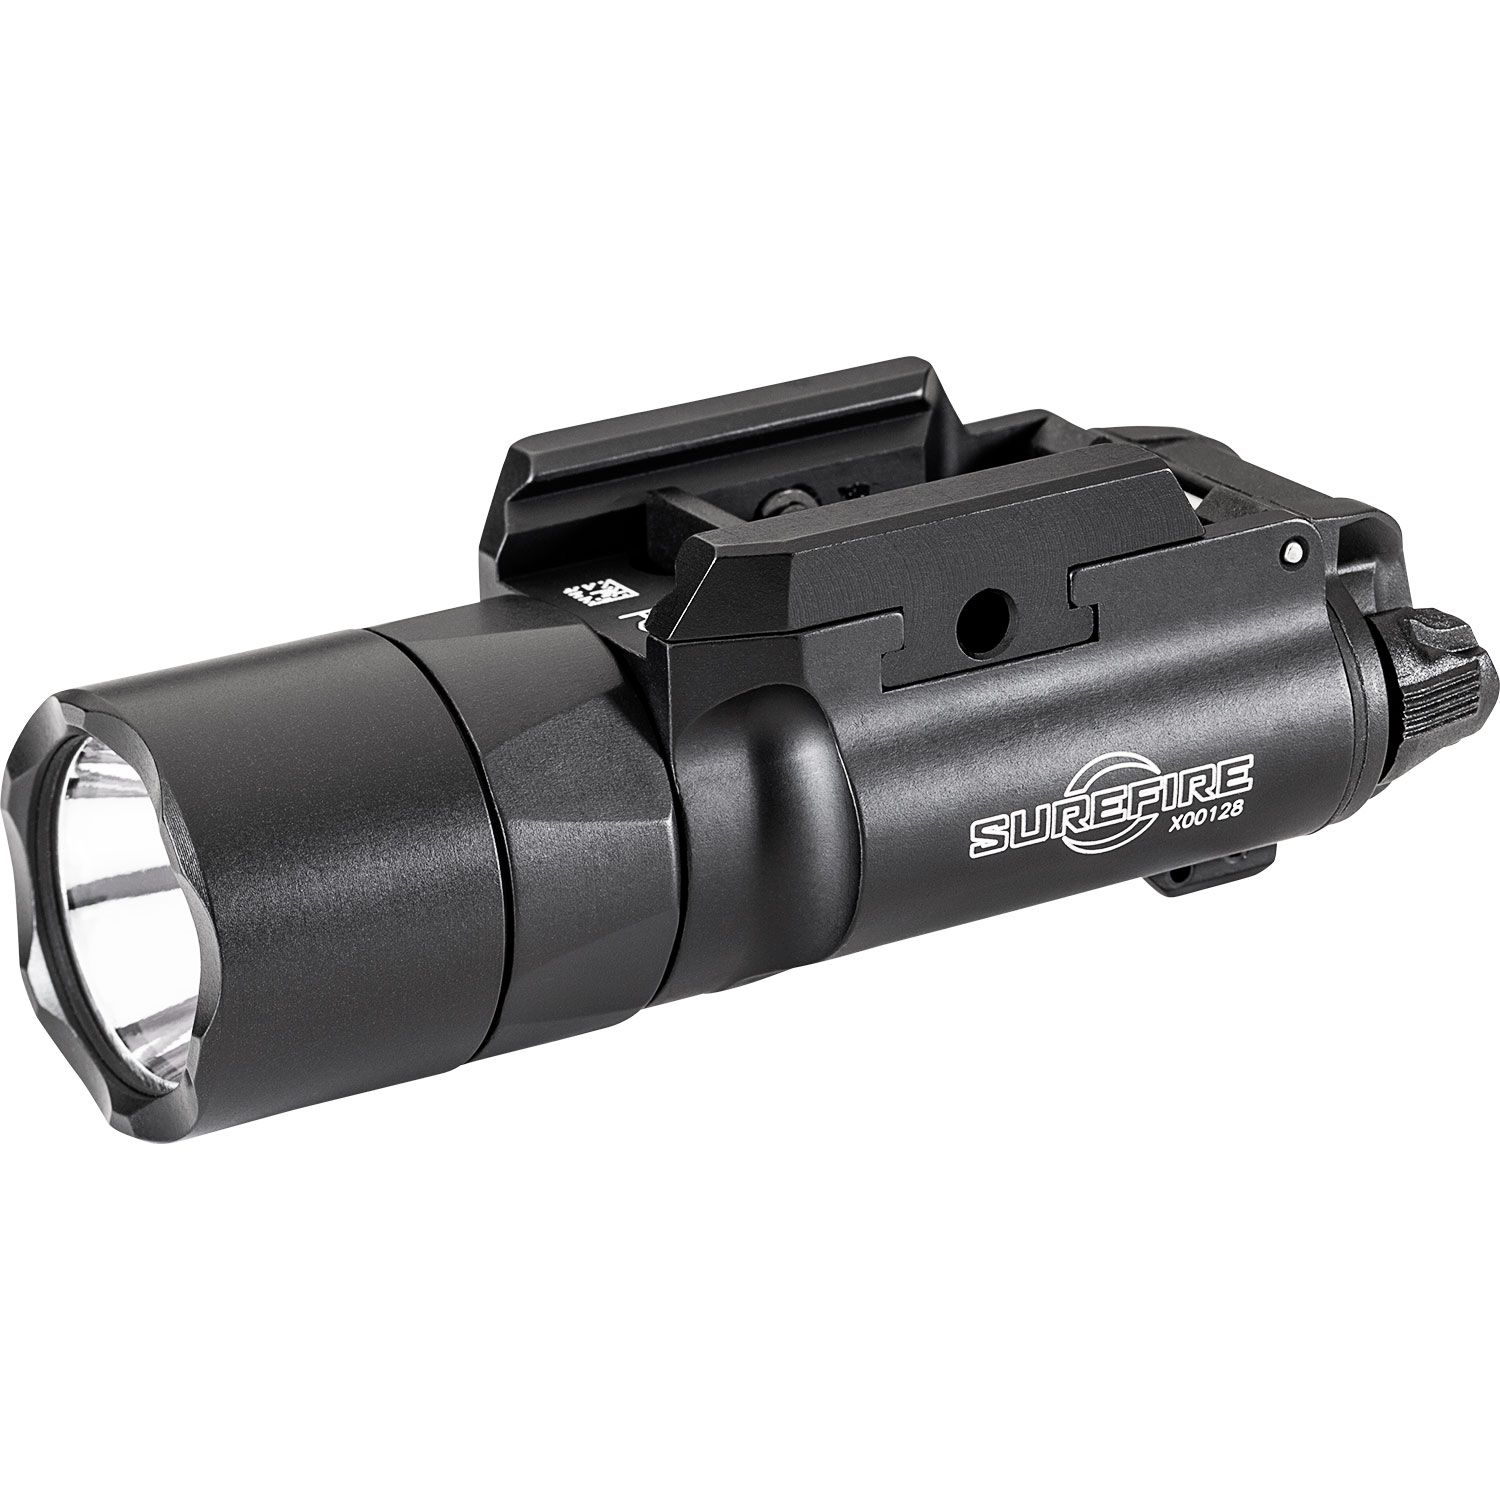 SureFire High-Candela LED Handgun WeaponLight X300T-B - Black